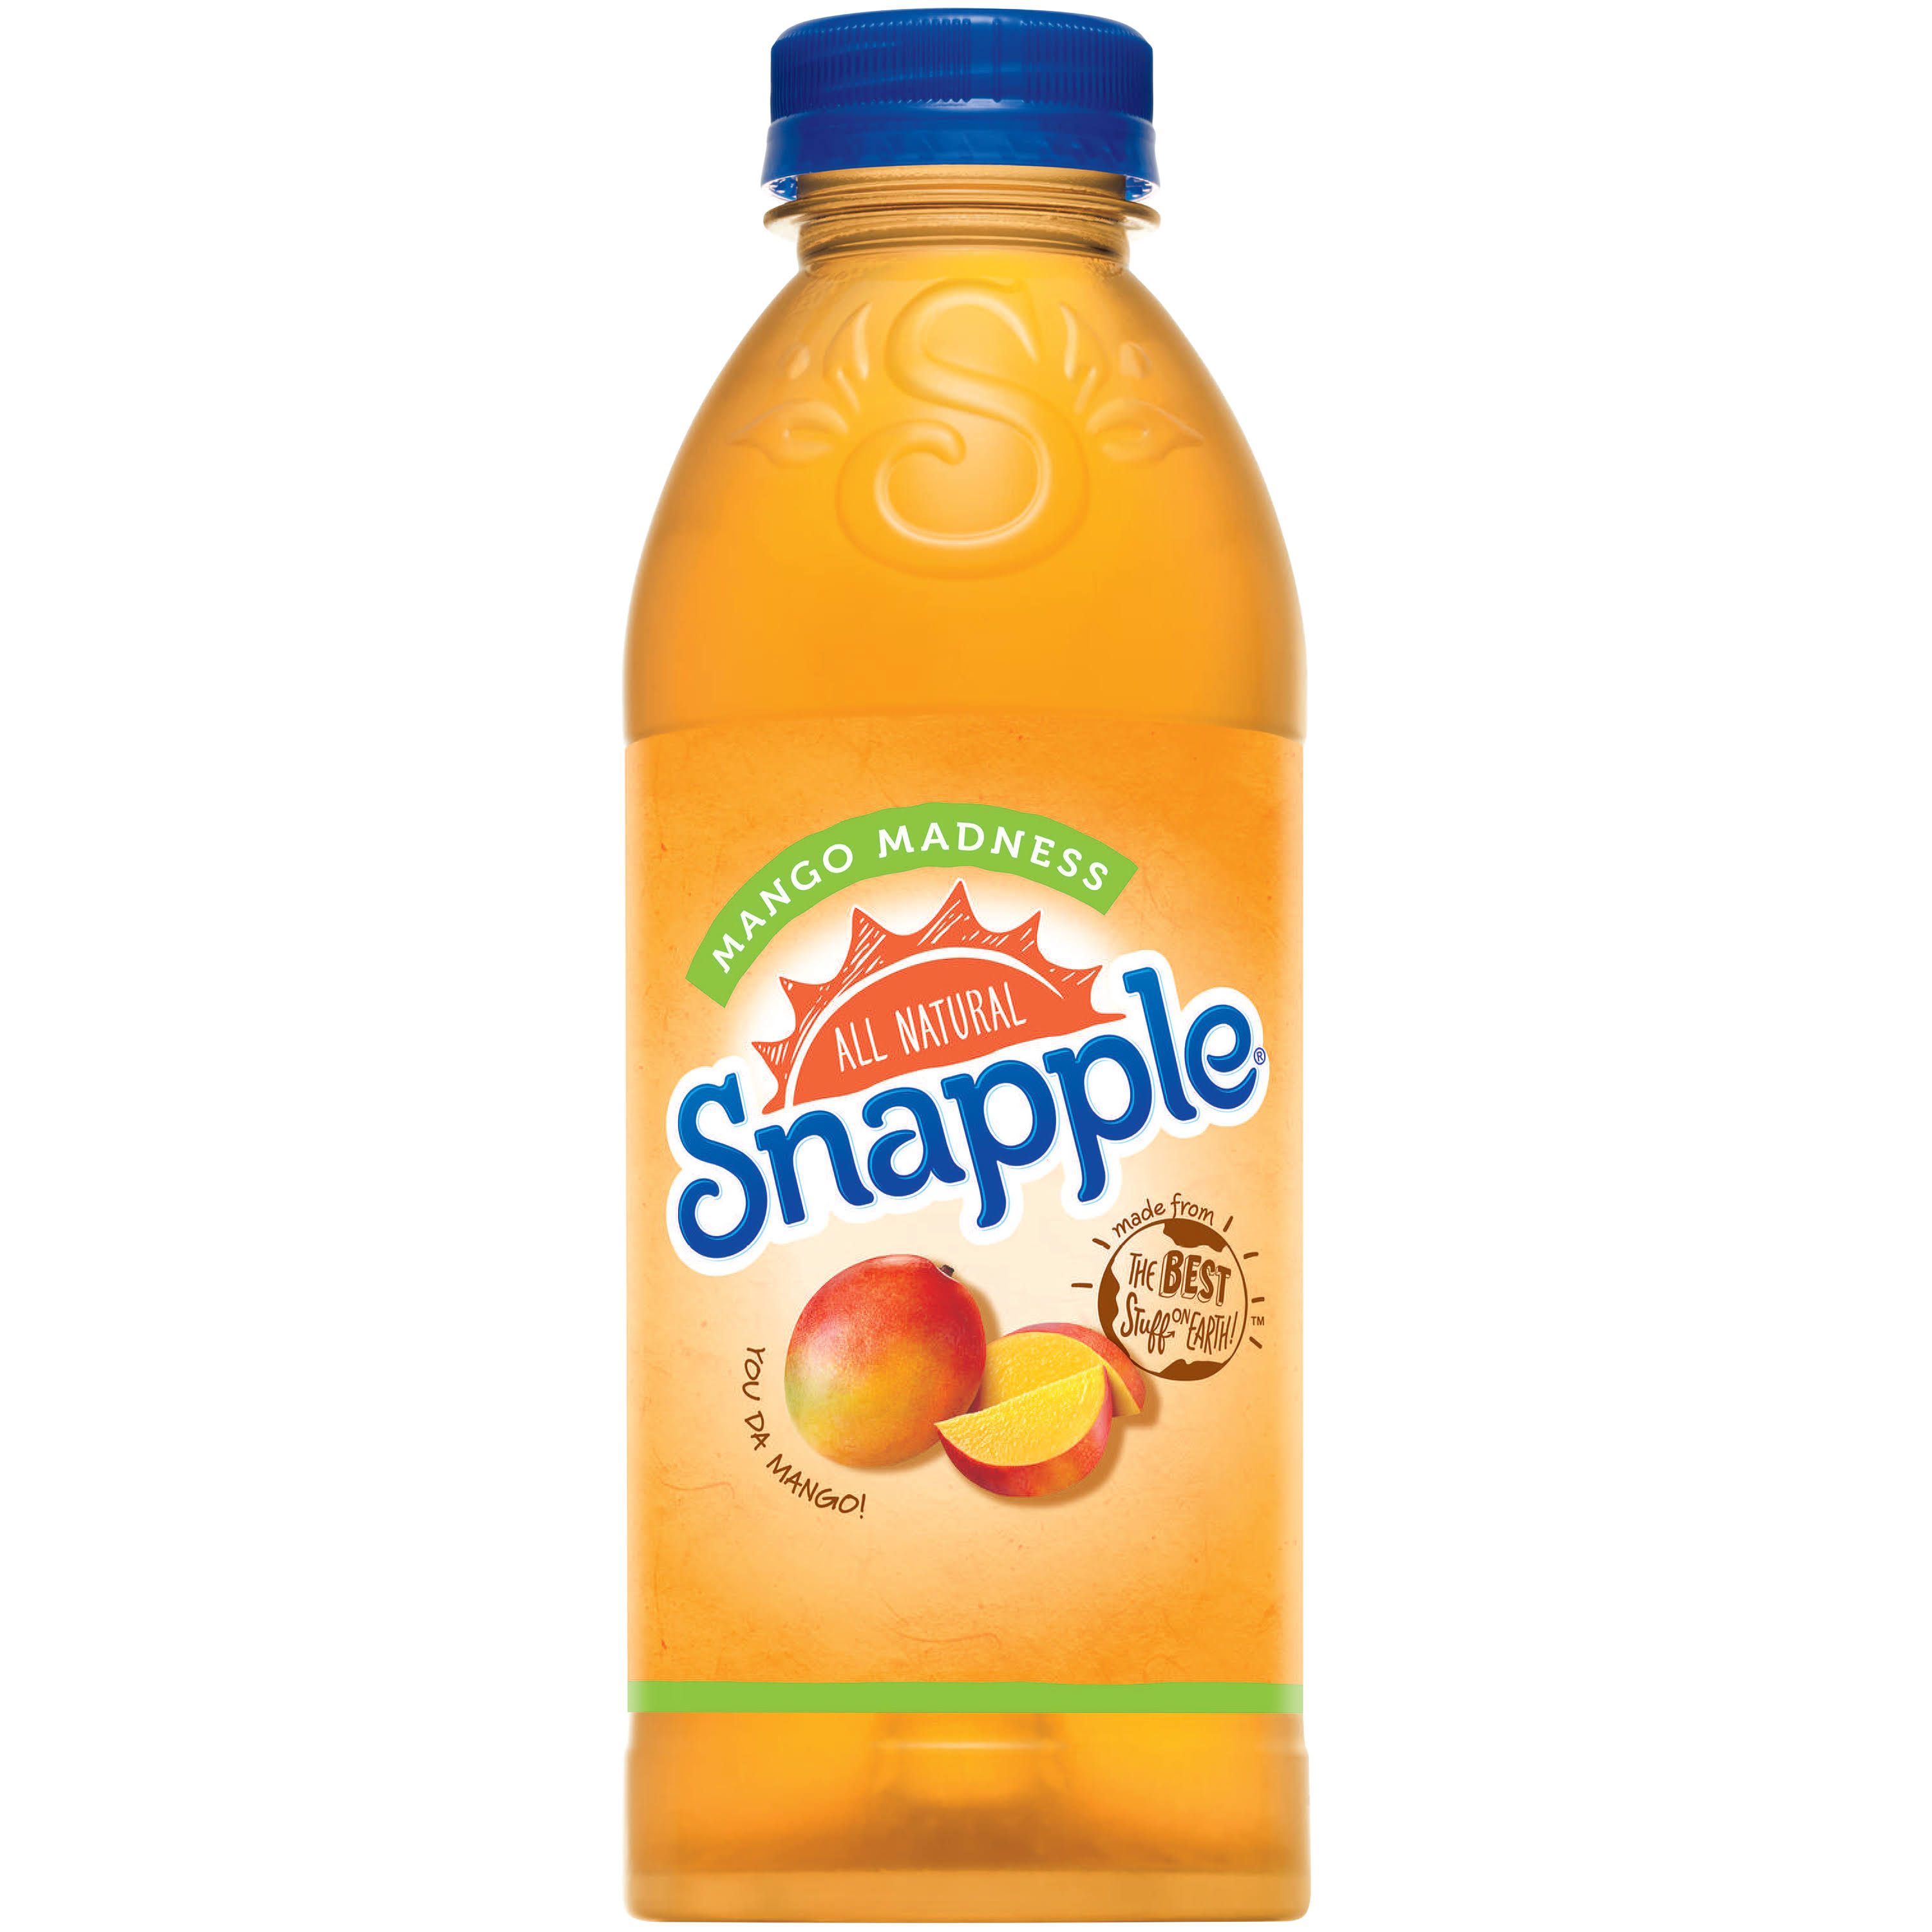 Snapple Juice Drink - Mango Madness